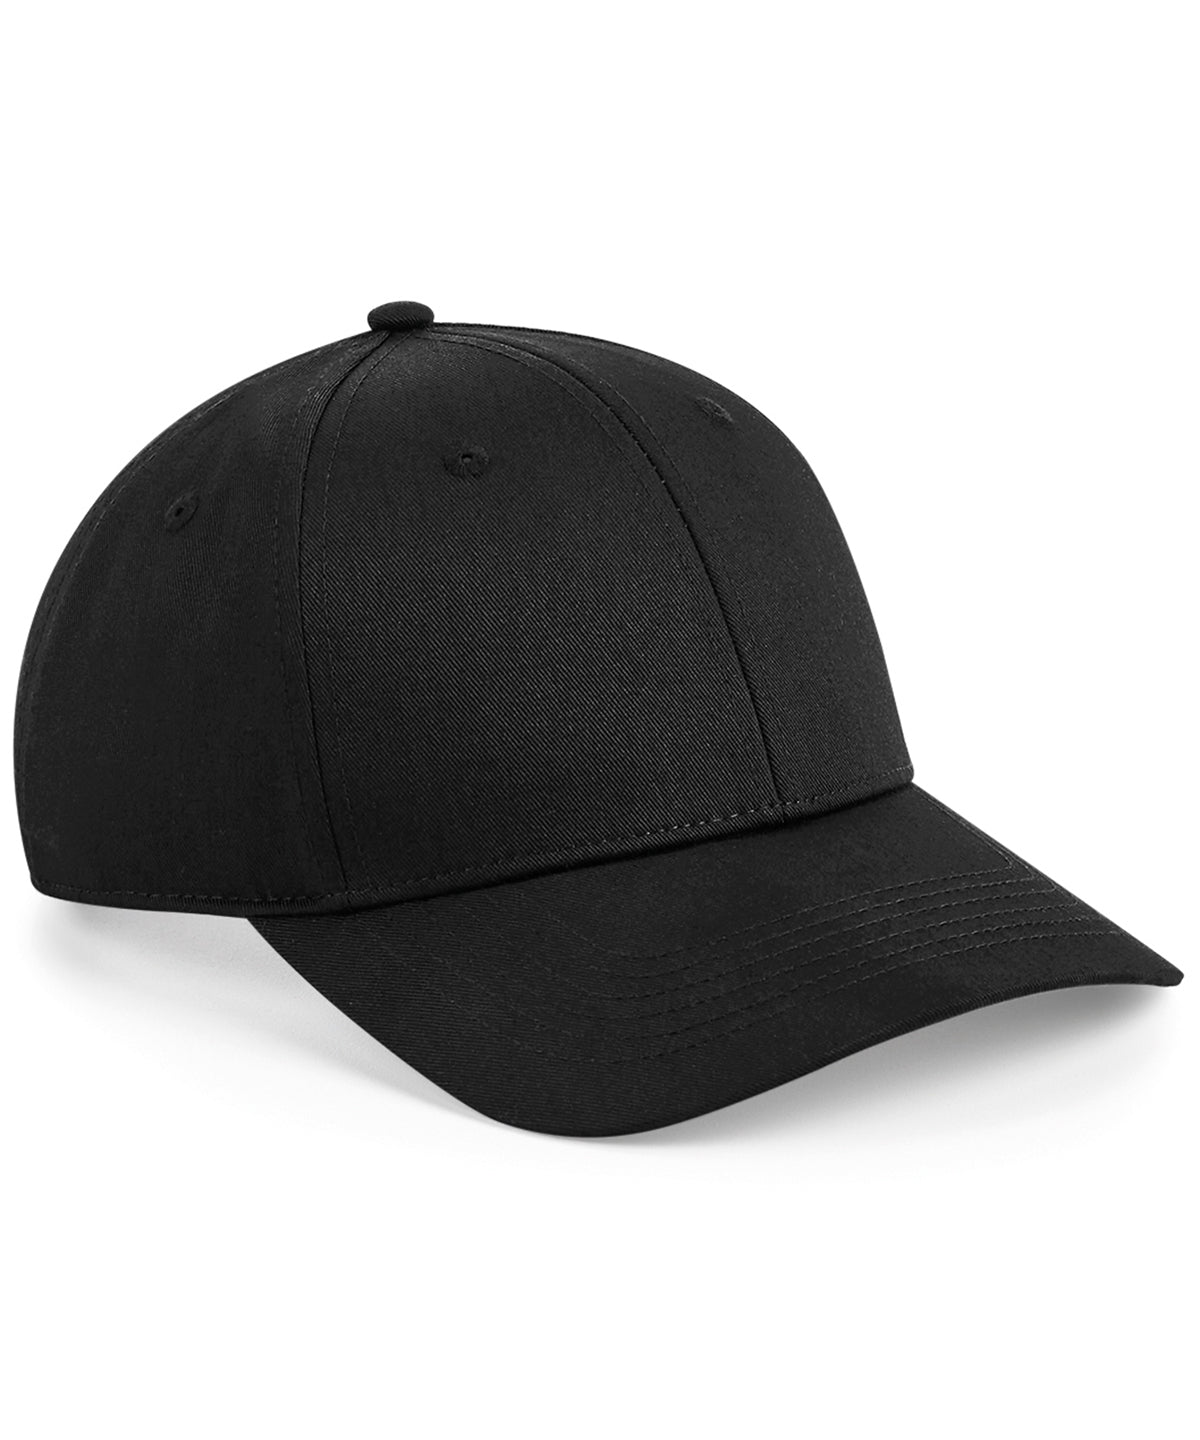 Personalised Caps - Black Beechfield Urbanwear 6-panel snapback